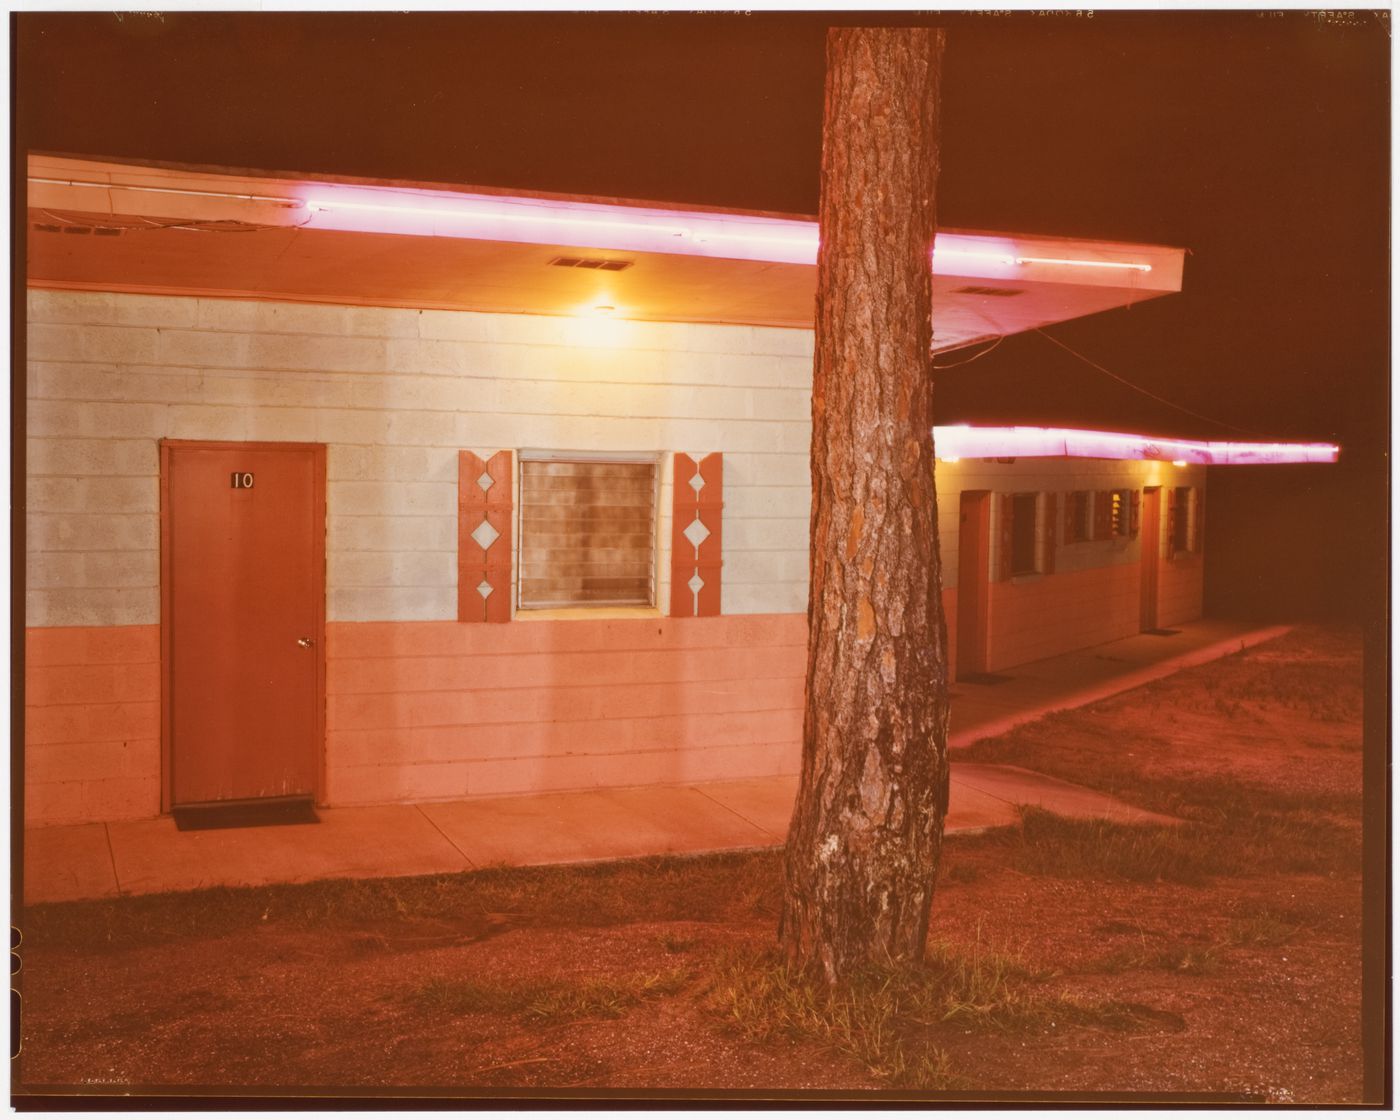 The Terrace Motel: Mobile, Alabama. 1978.